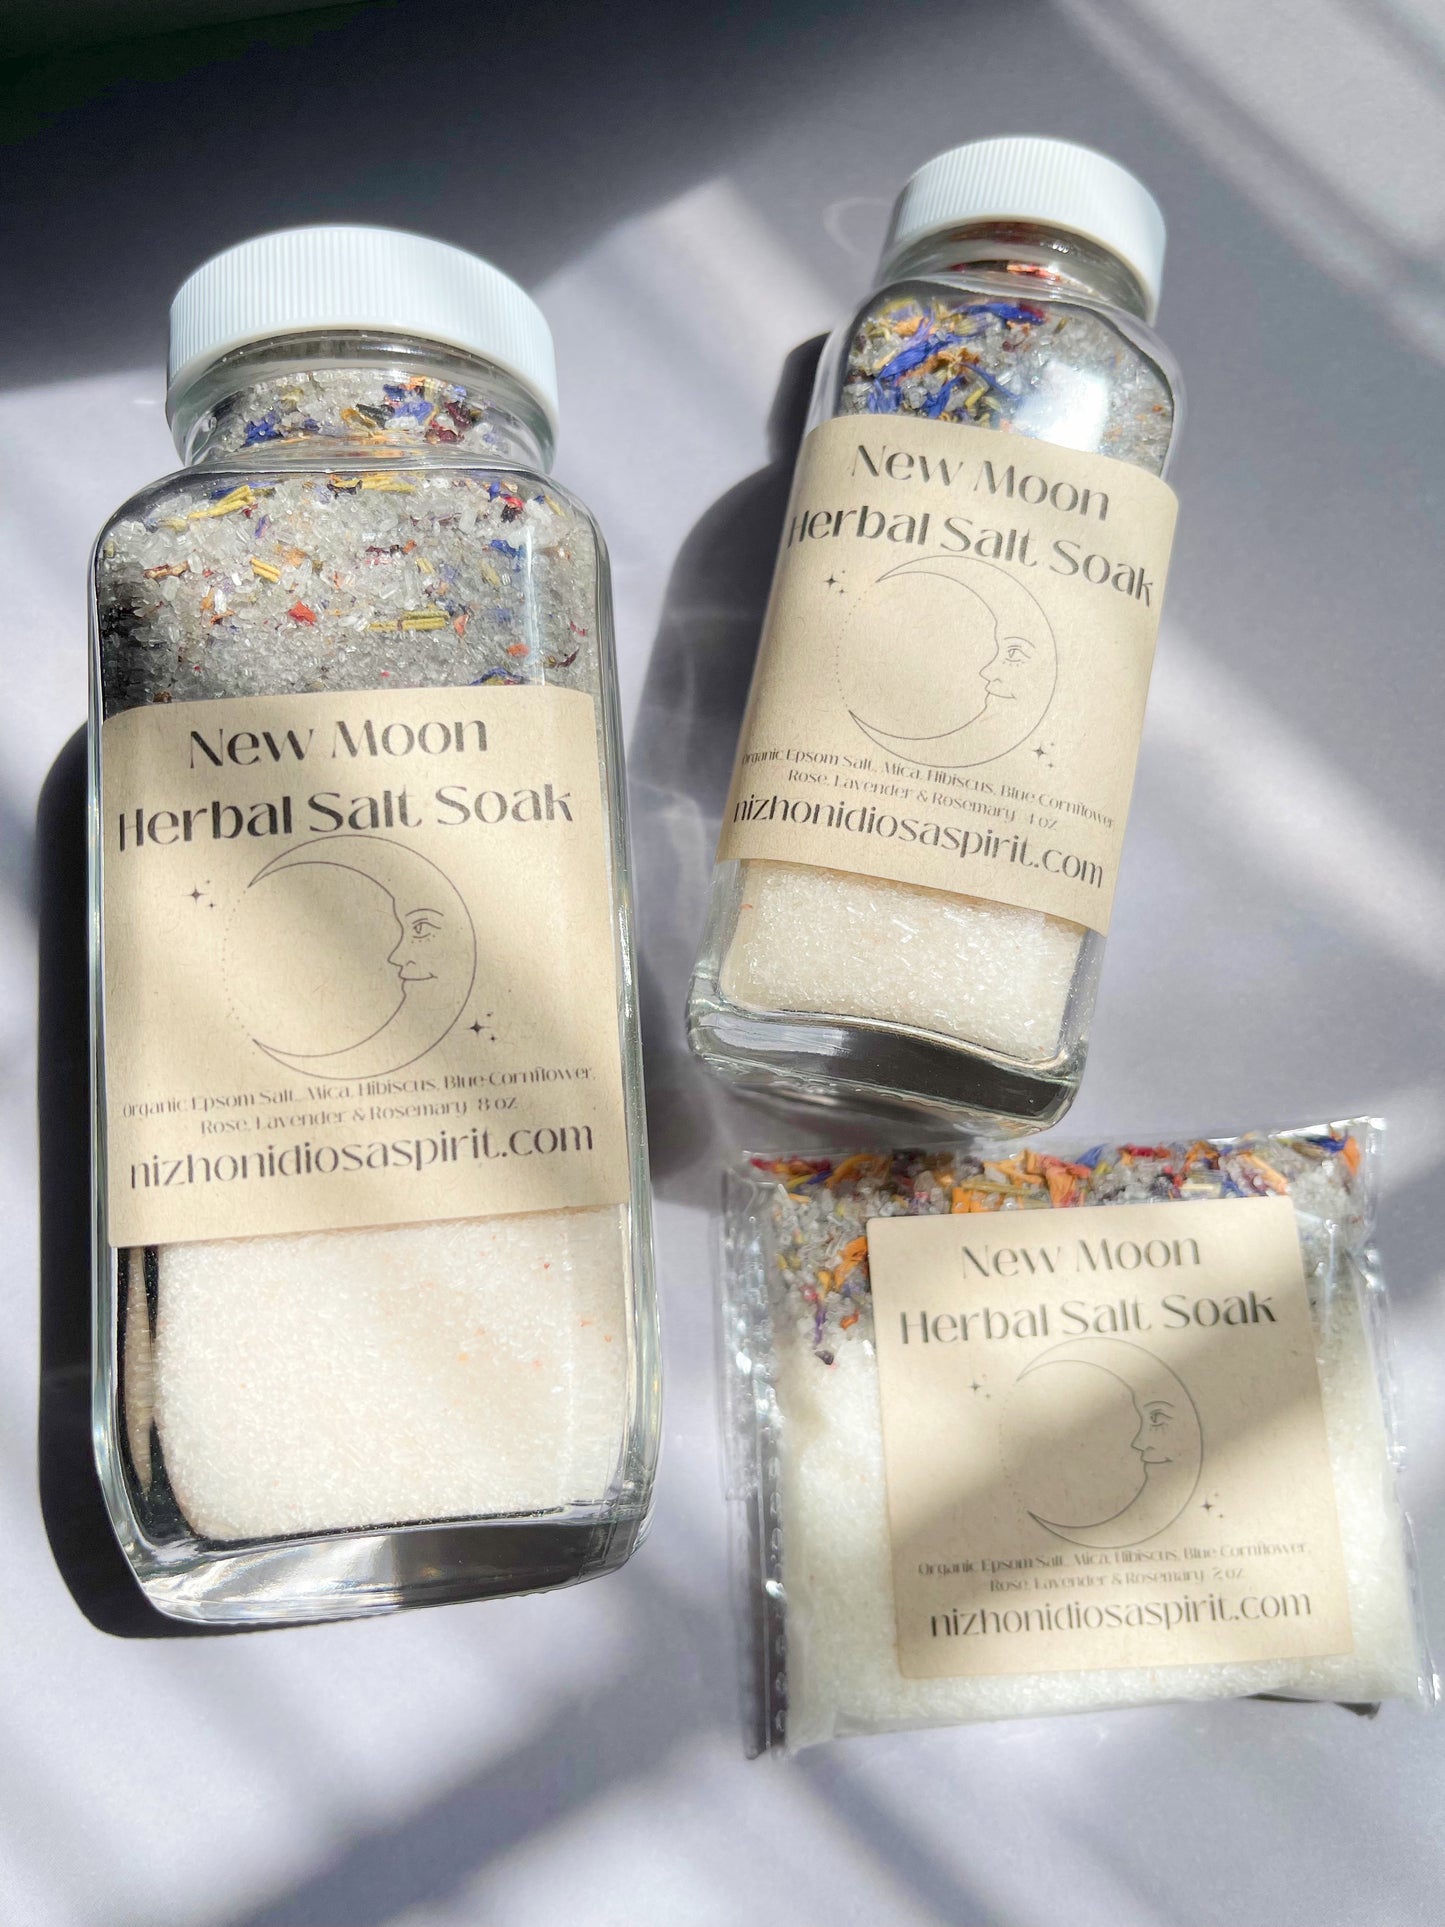 New Moon Herbal Salt Soak